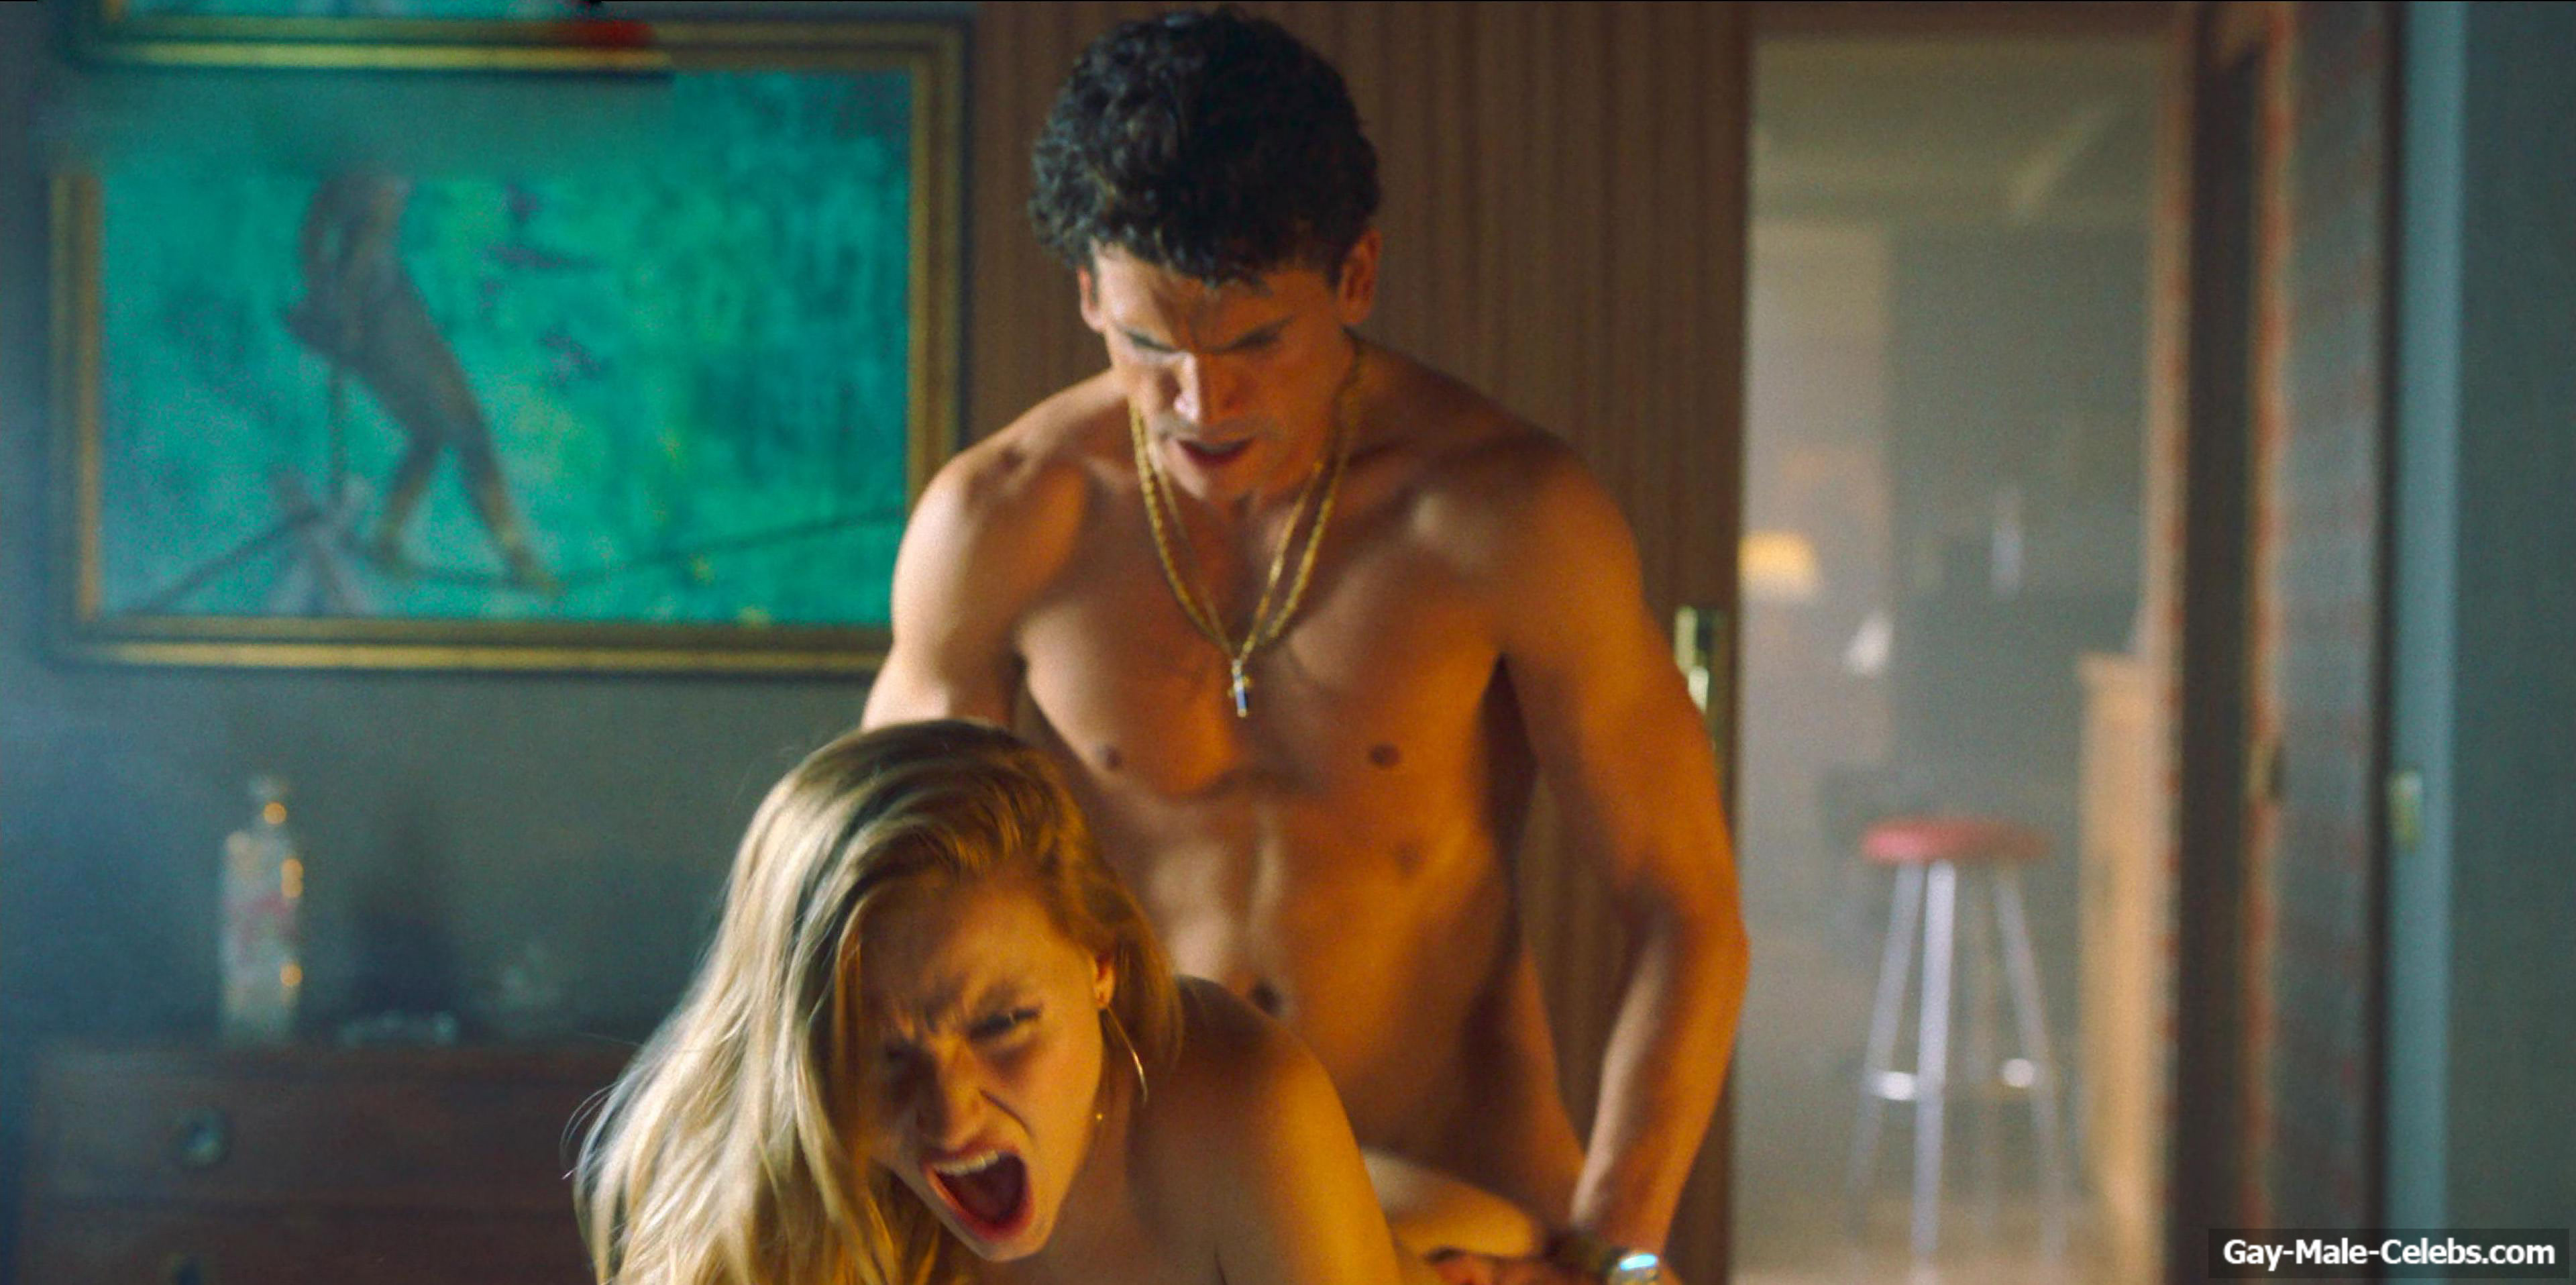 Jaime Lorente Nude And Sex Movie Scenes